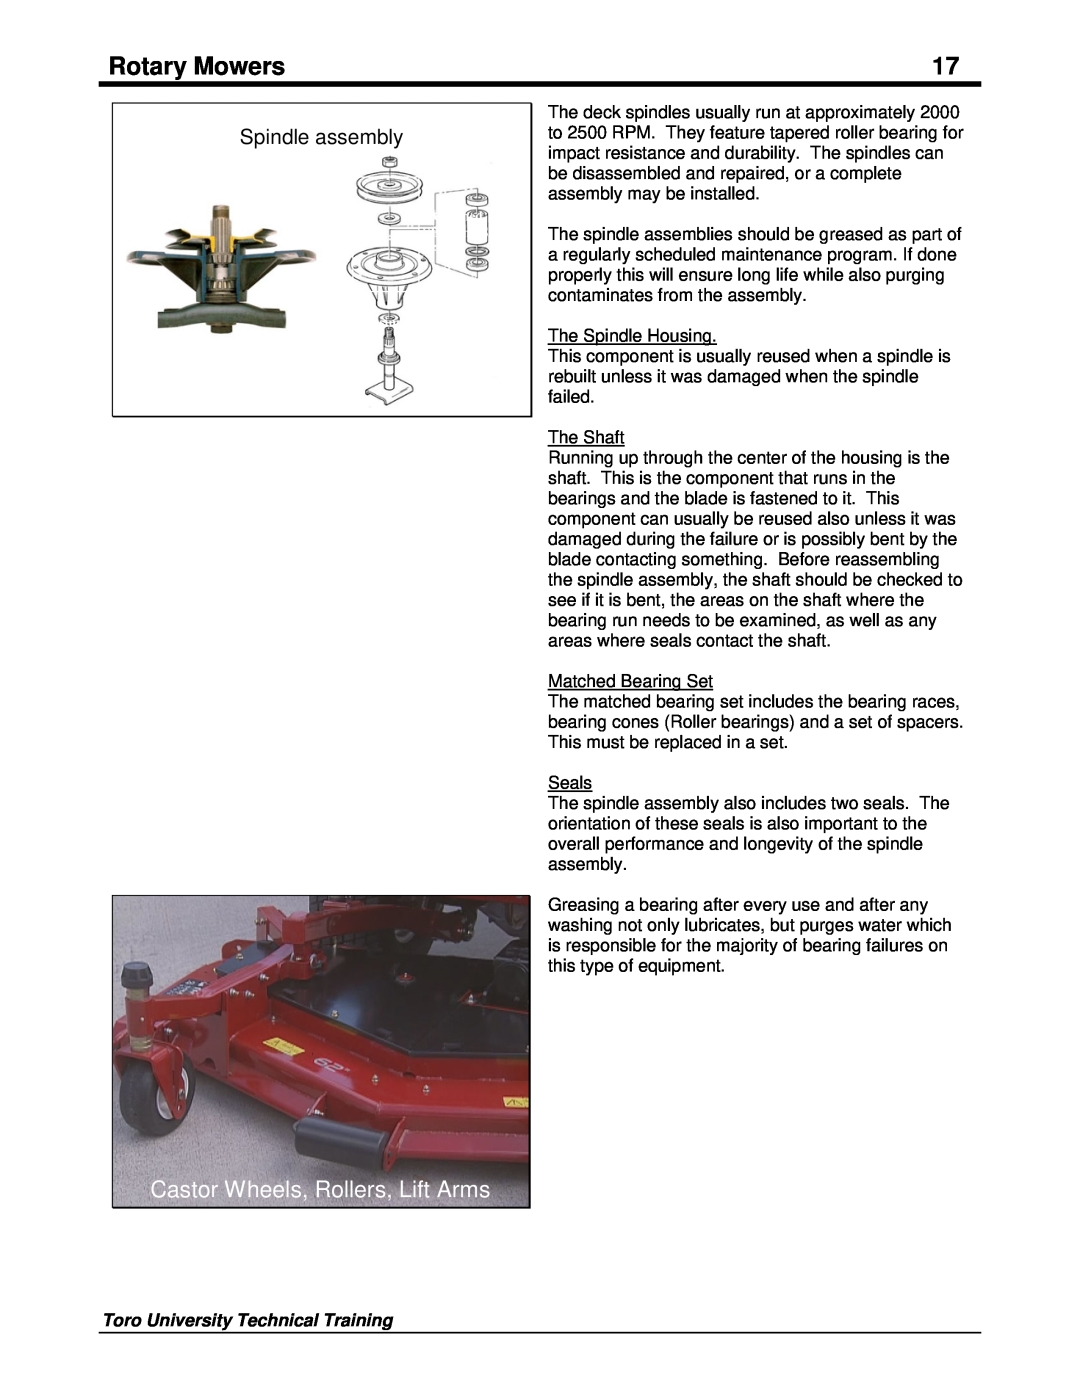 Toro 09167SL manual Rotary Mowers, Castor Wheels, Rollers, Lift Arms, Toro University Technical Training 